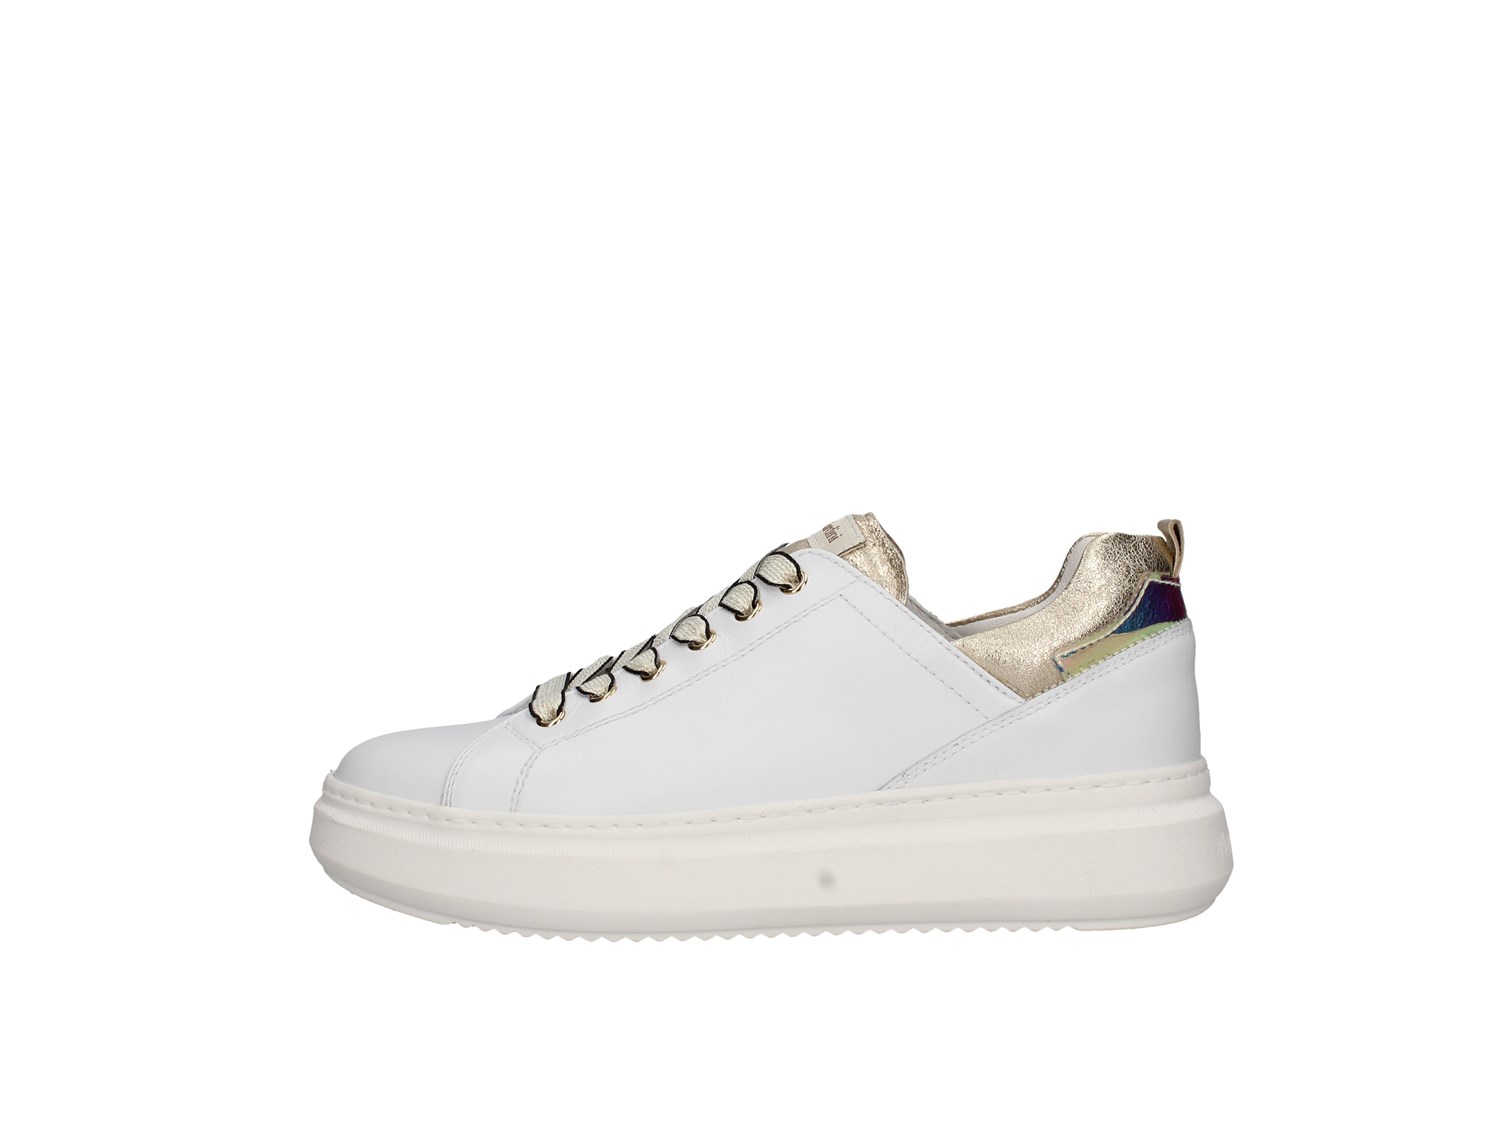 Nero Giardini E115261d White Shoes Women Sneakers